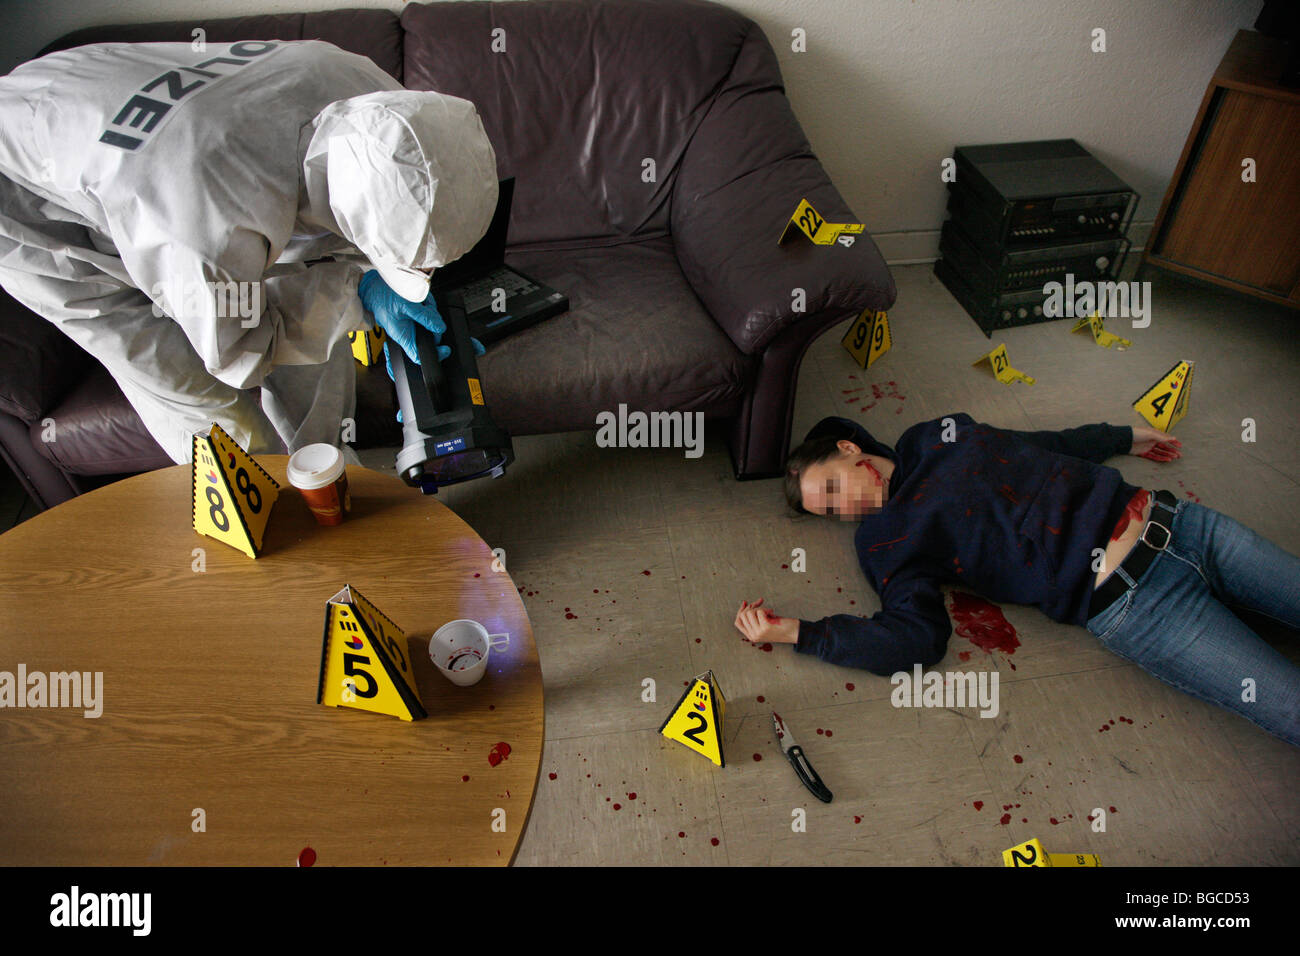 Crime scene investigation, forensic people at a murder scene. Police work, preservation of evidences. Stock Photo